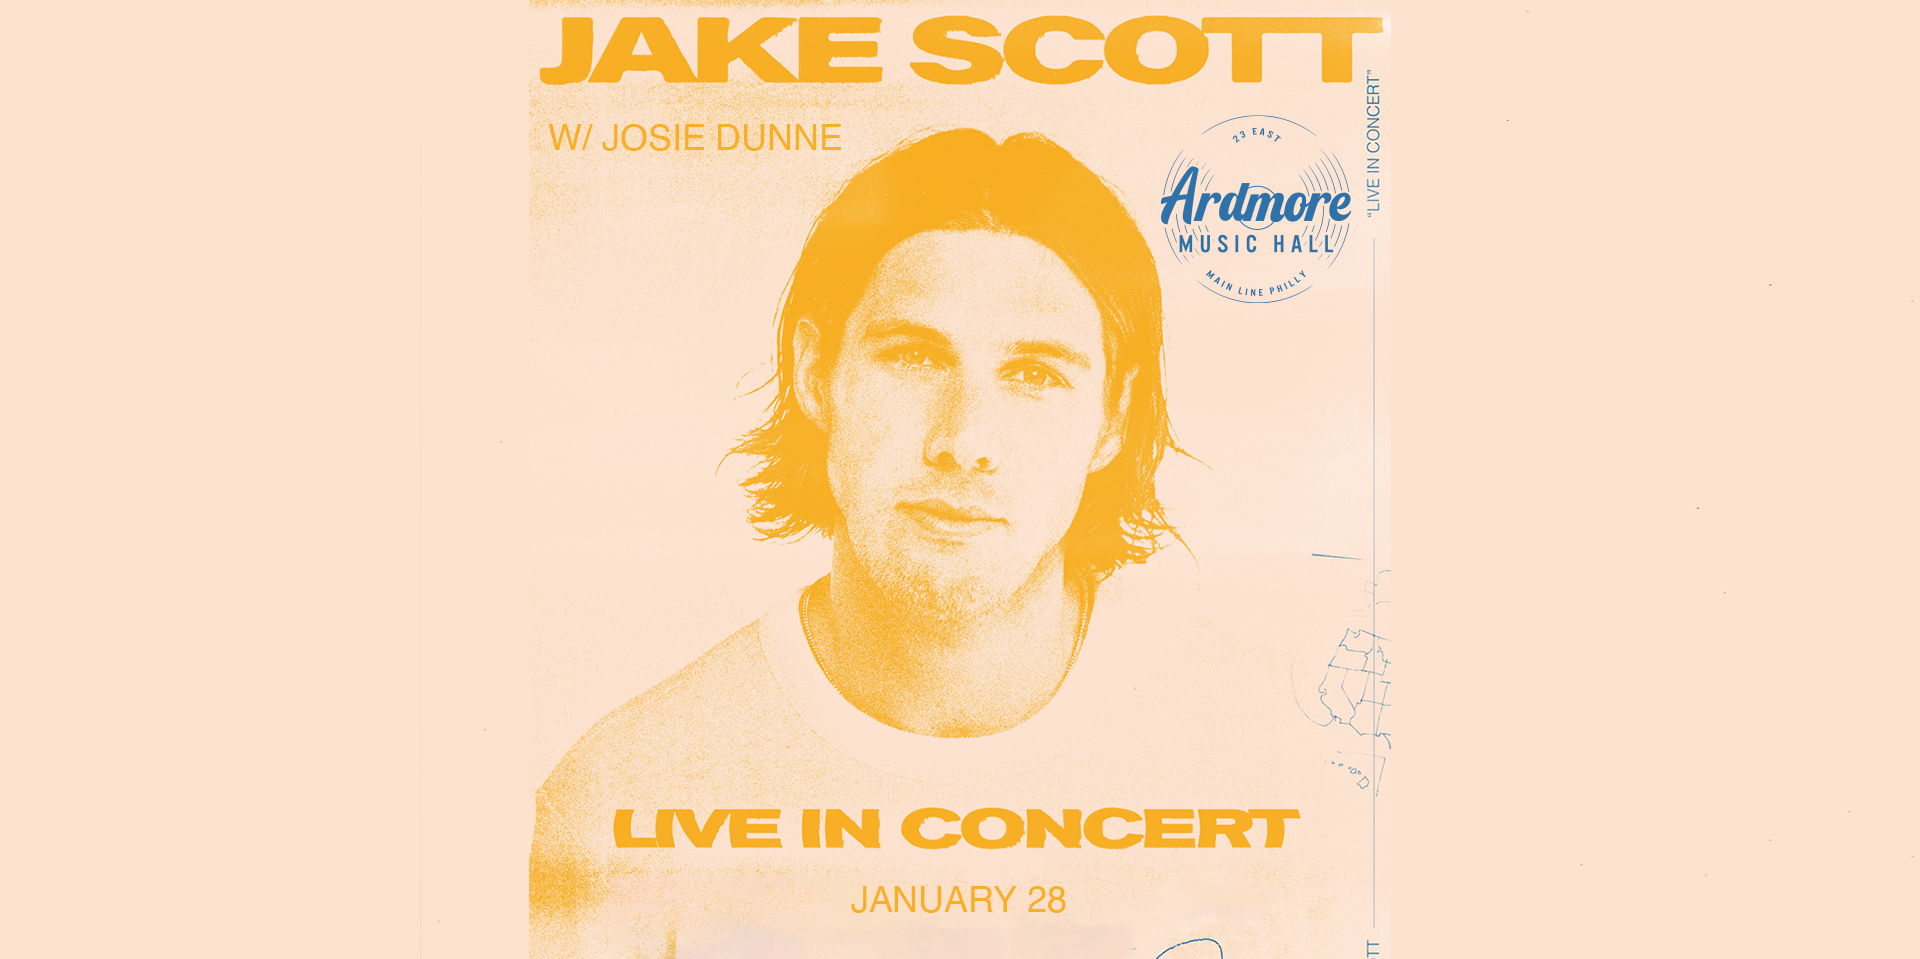 Jake Scott w/ Josie Dunne at Ardmore Music Hall 1/28 promotional image